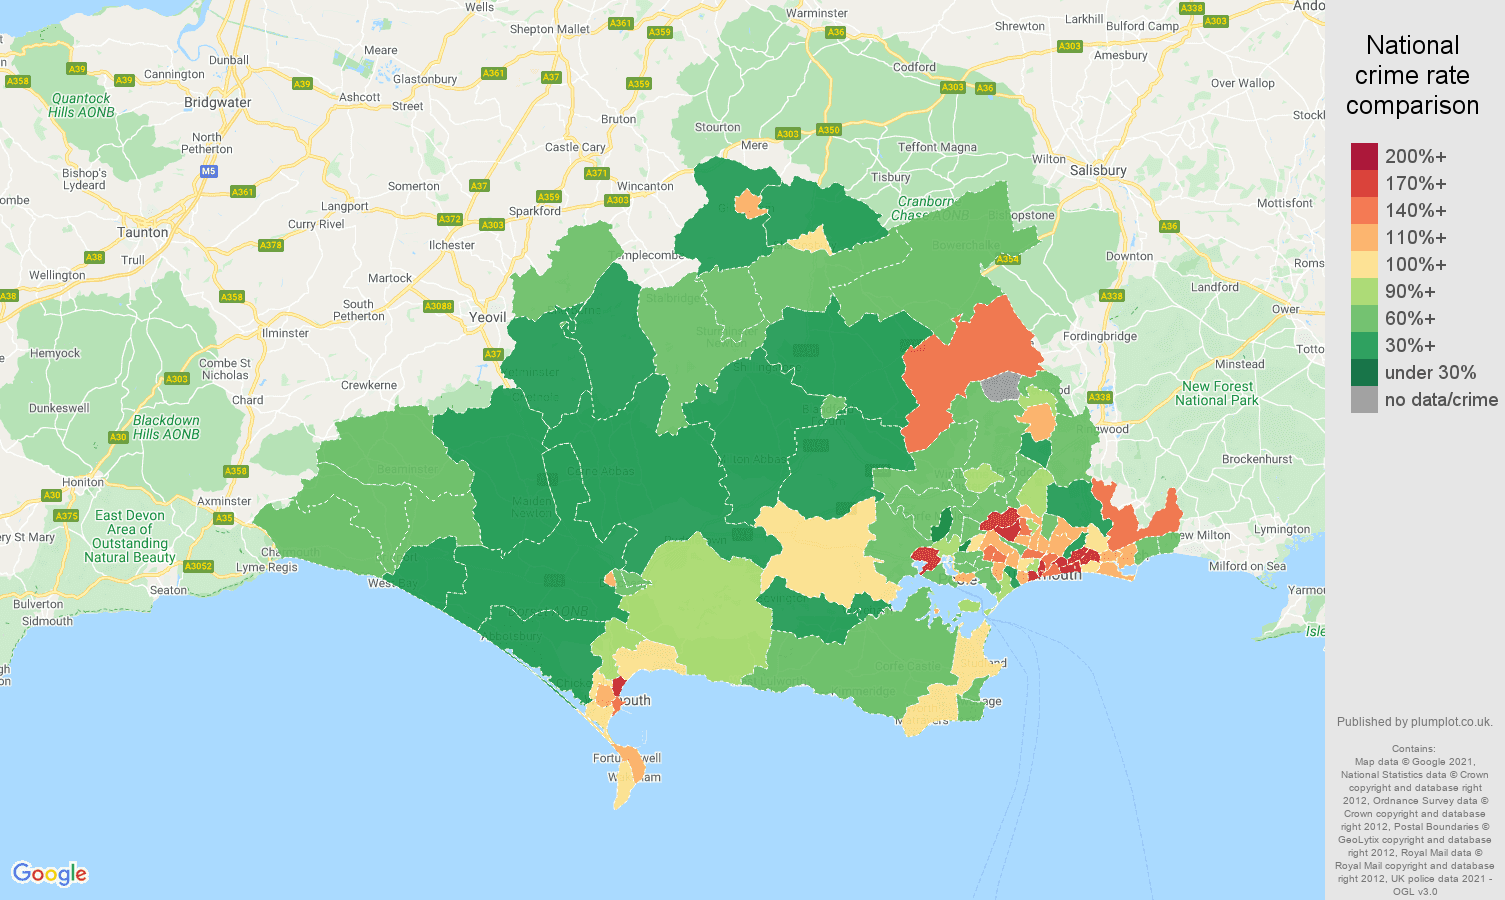 Dorset criminal damage and arson crime rate comparison map